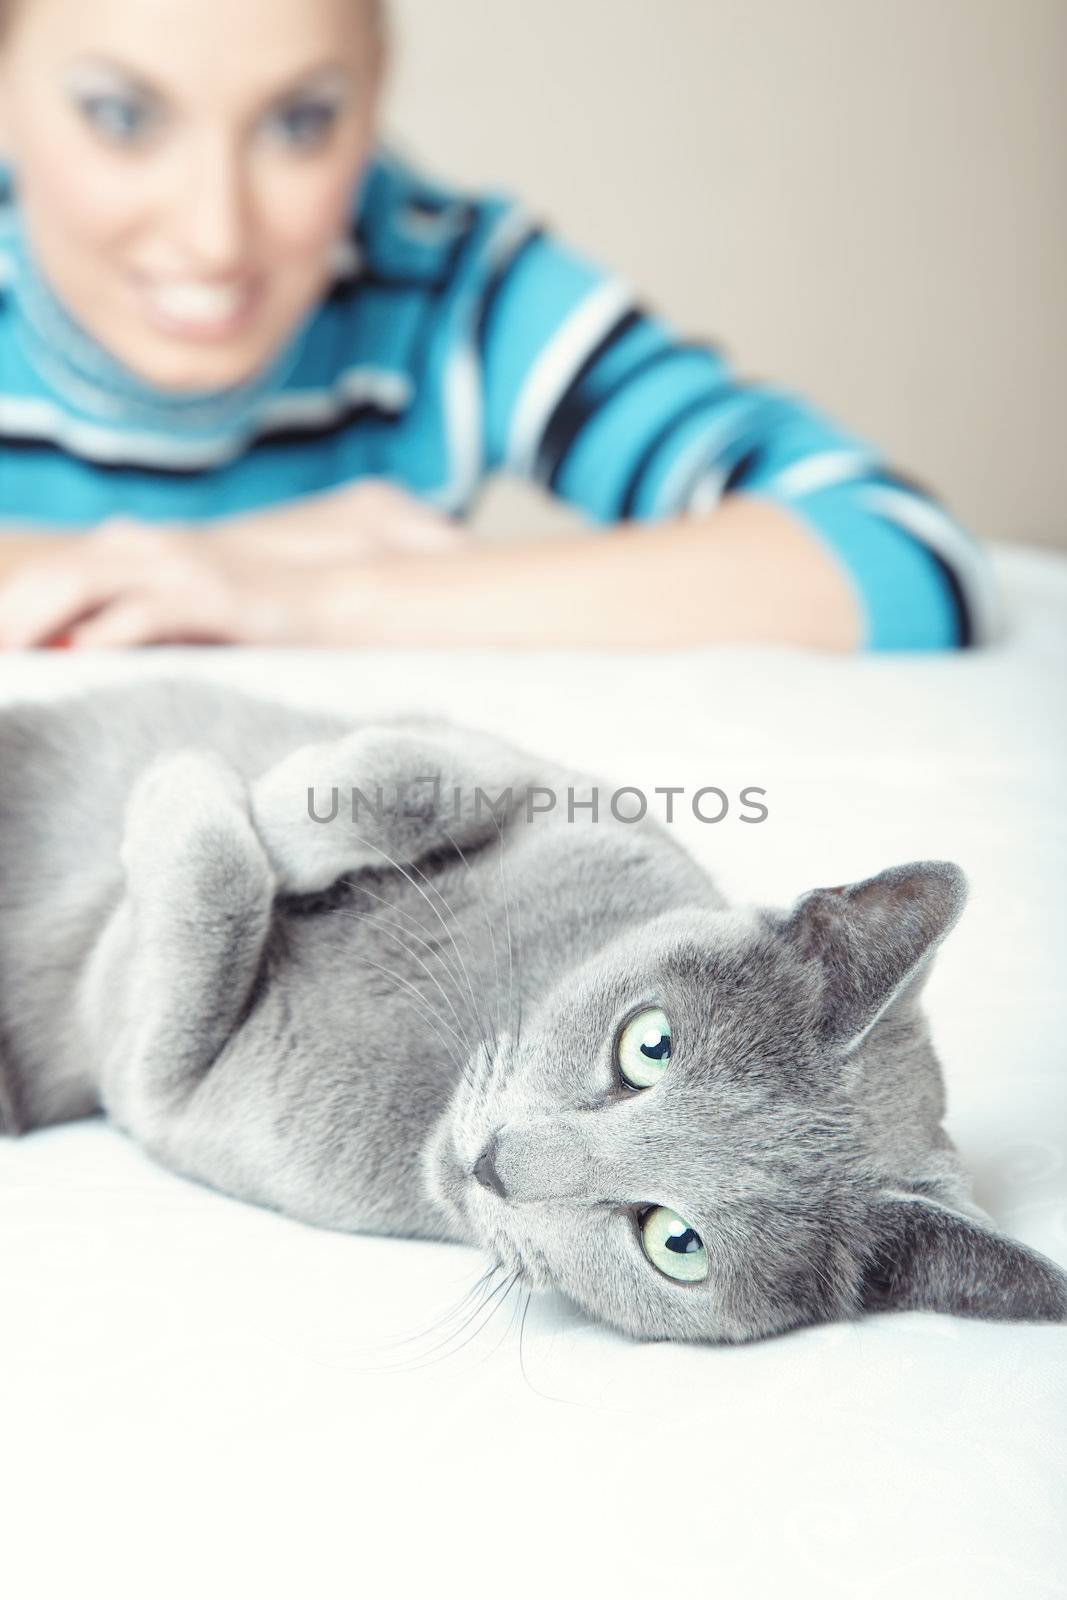 Cat pampering indoors and defocused smiling woman